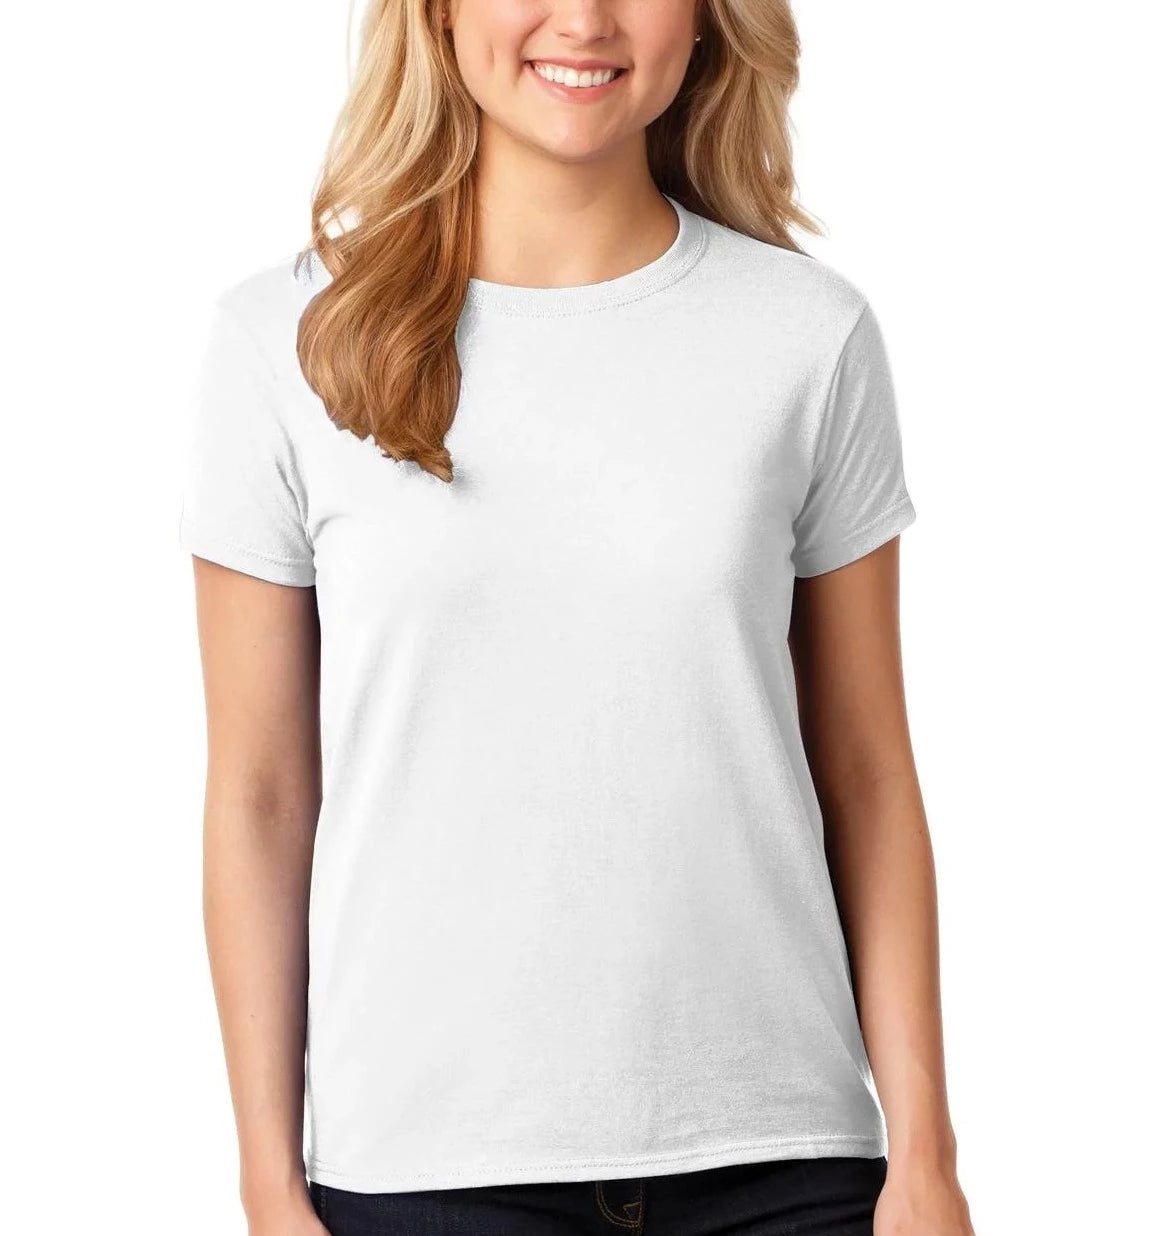 Gildan Women Shirt Cotton Women Shirts Womens Value Shirts Best Womens Classic Short Sleeve T-Shirt Blank All Color Black Shirts for Women White Shirt